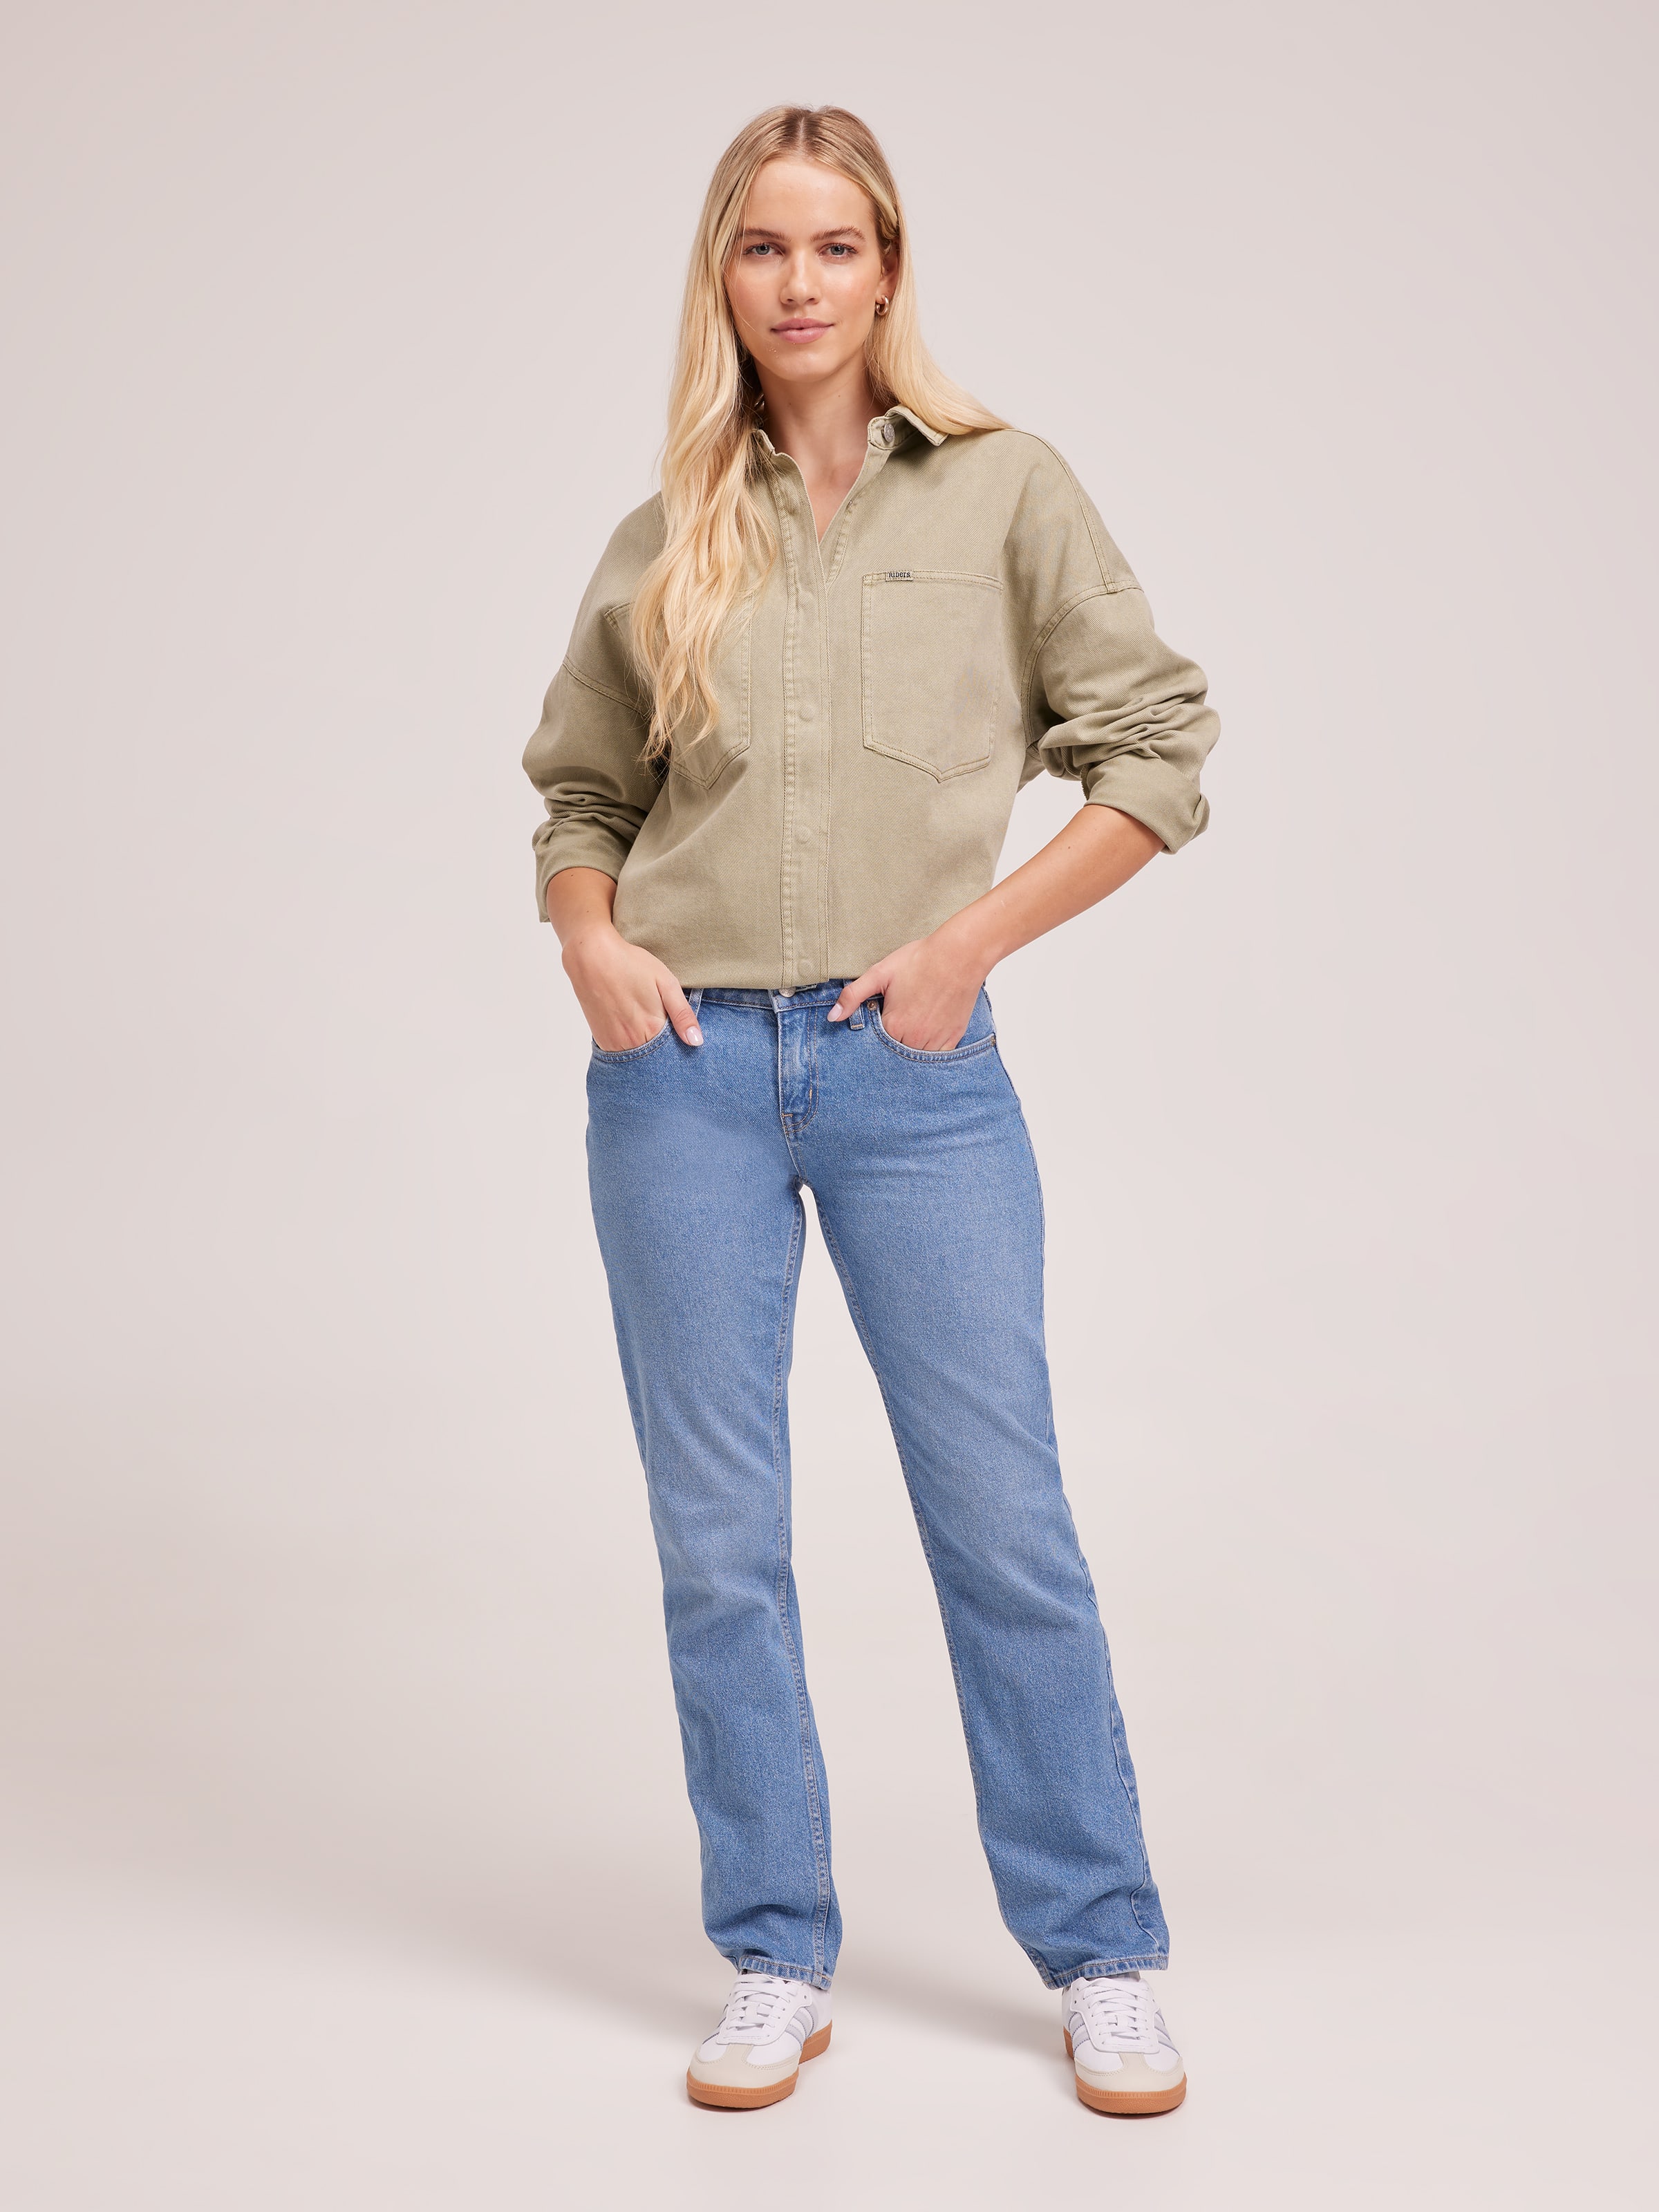 Women'S Jeans Denim Pants 2020 Causal Loose Straight Blue High Waist Korean  Slim Cowboy Trousers Fashion Thin New Trend